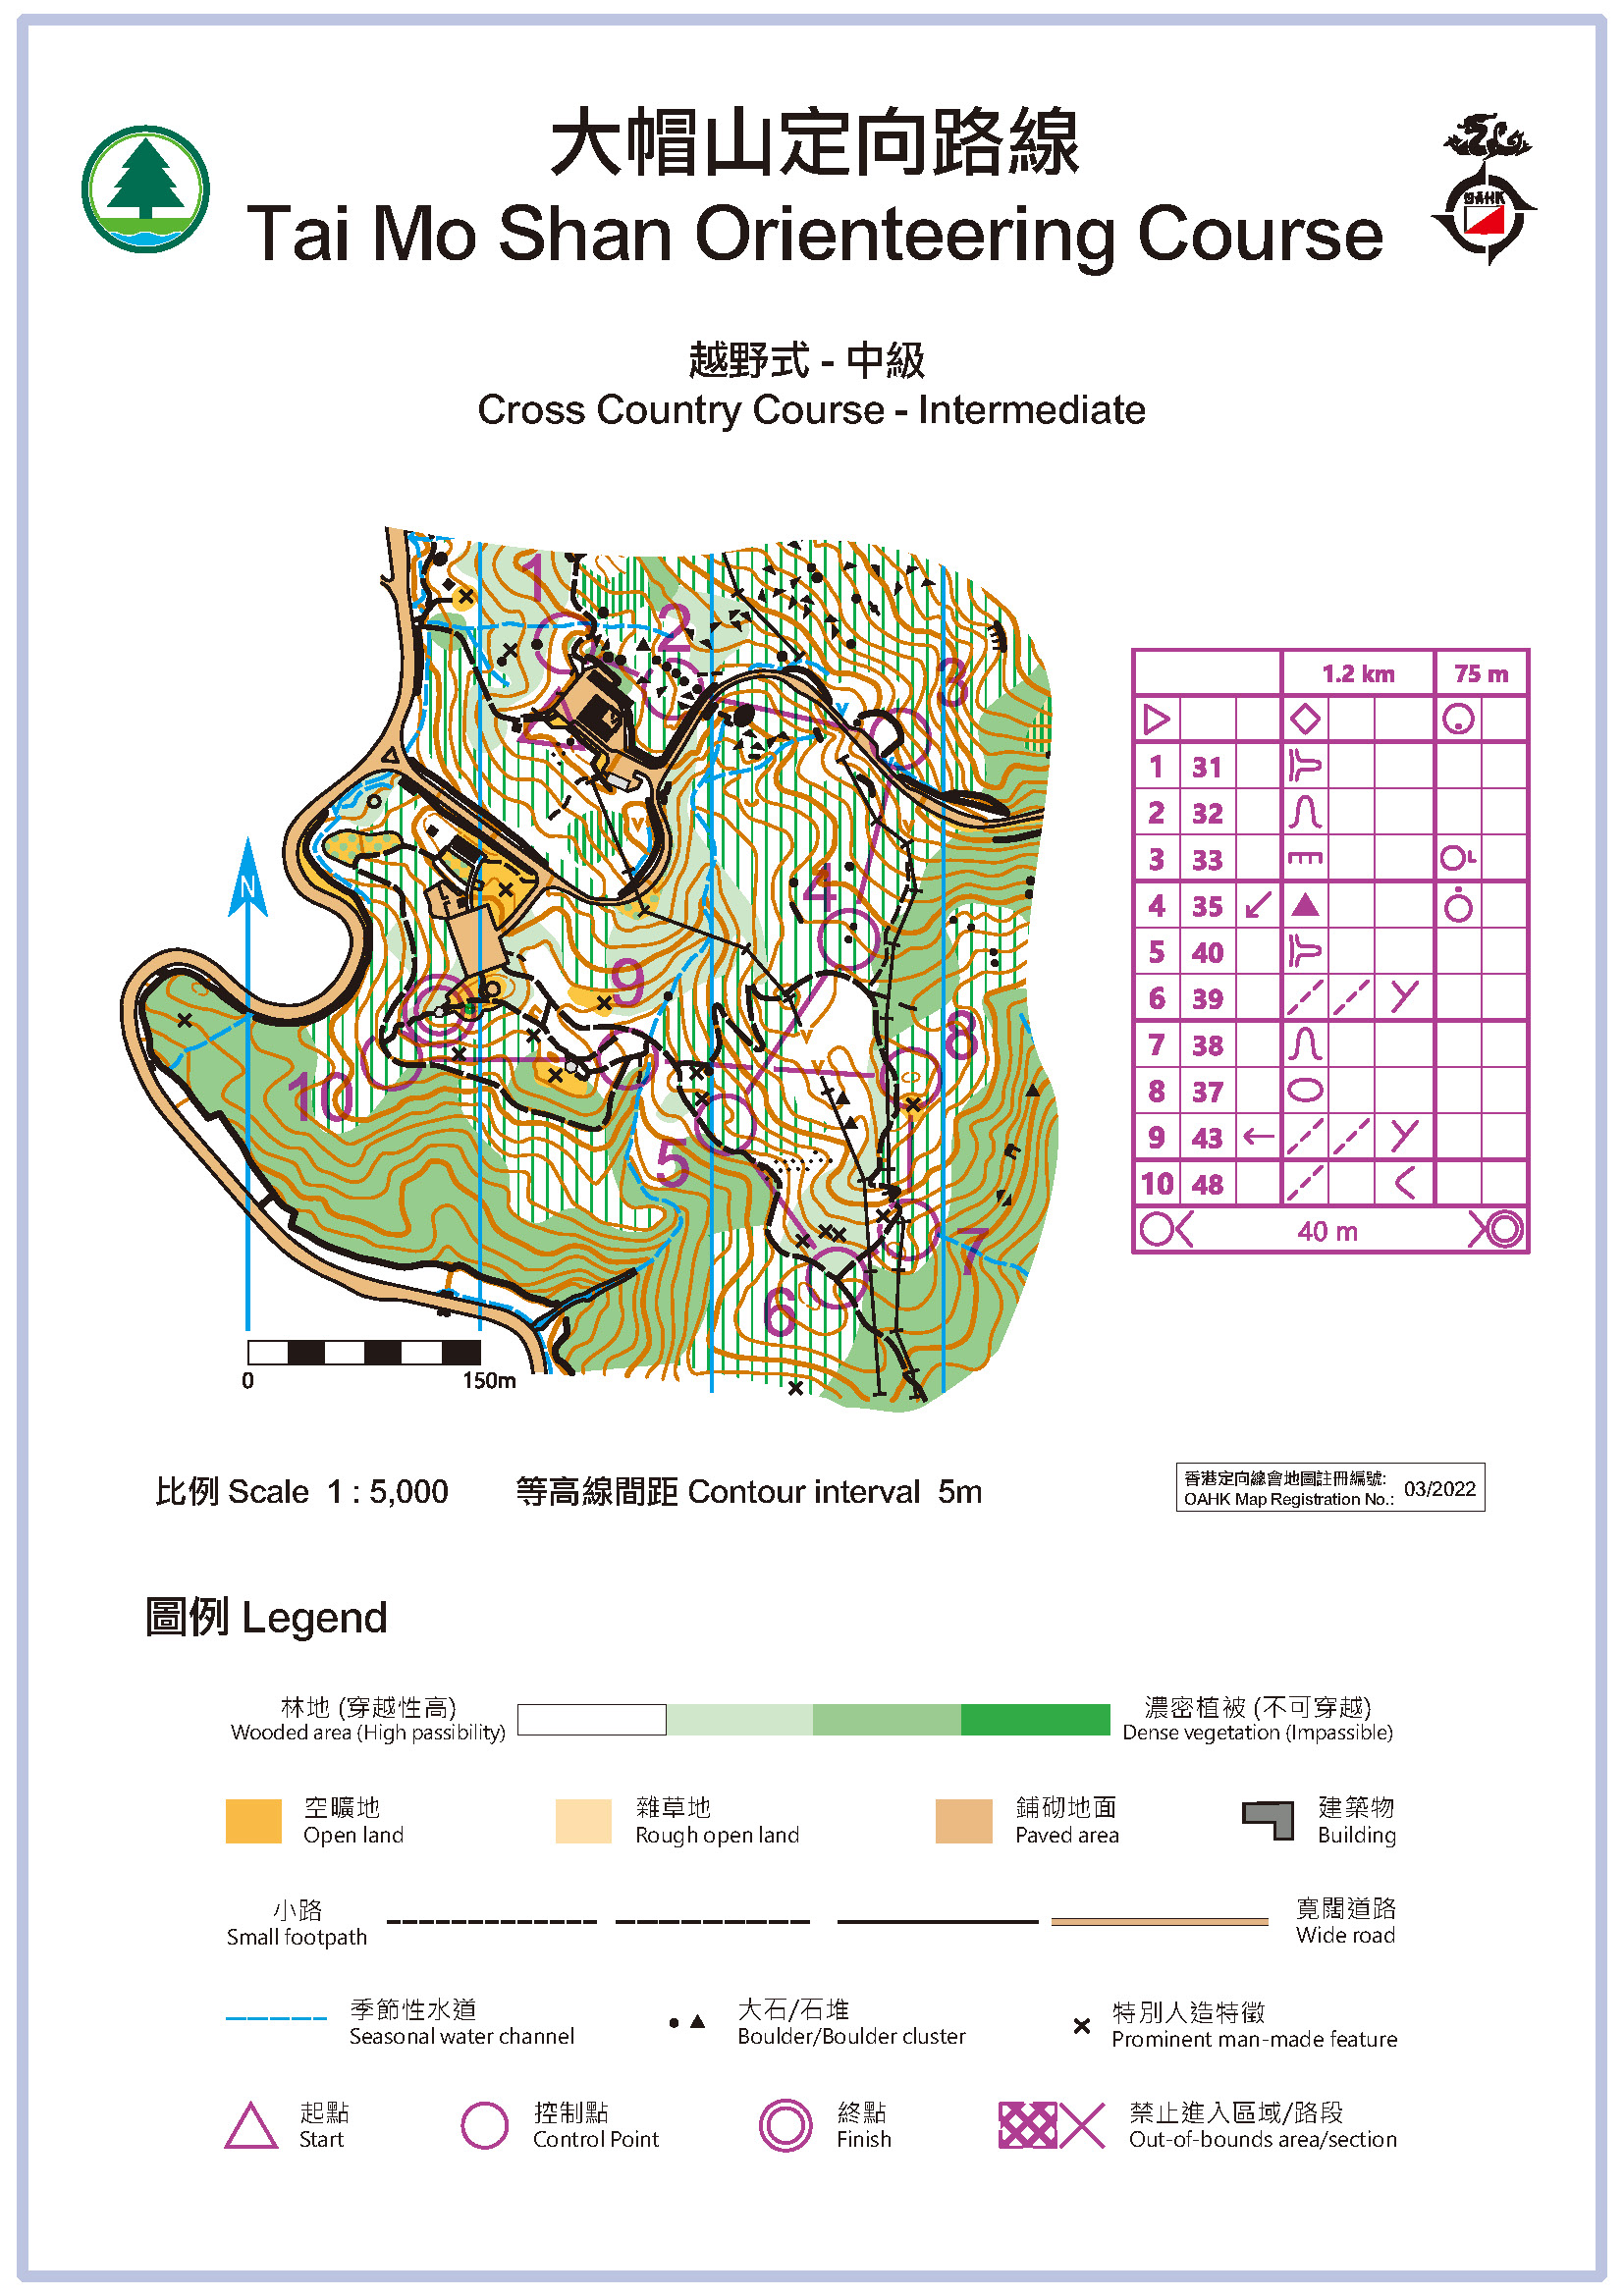 Map Tai Mo Shan Orienteering Course - Intermediate